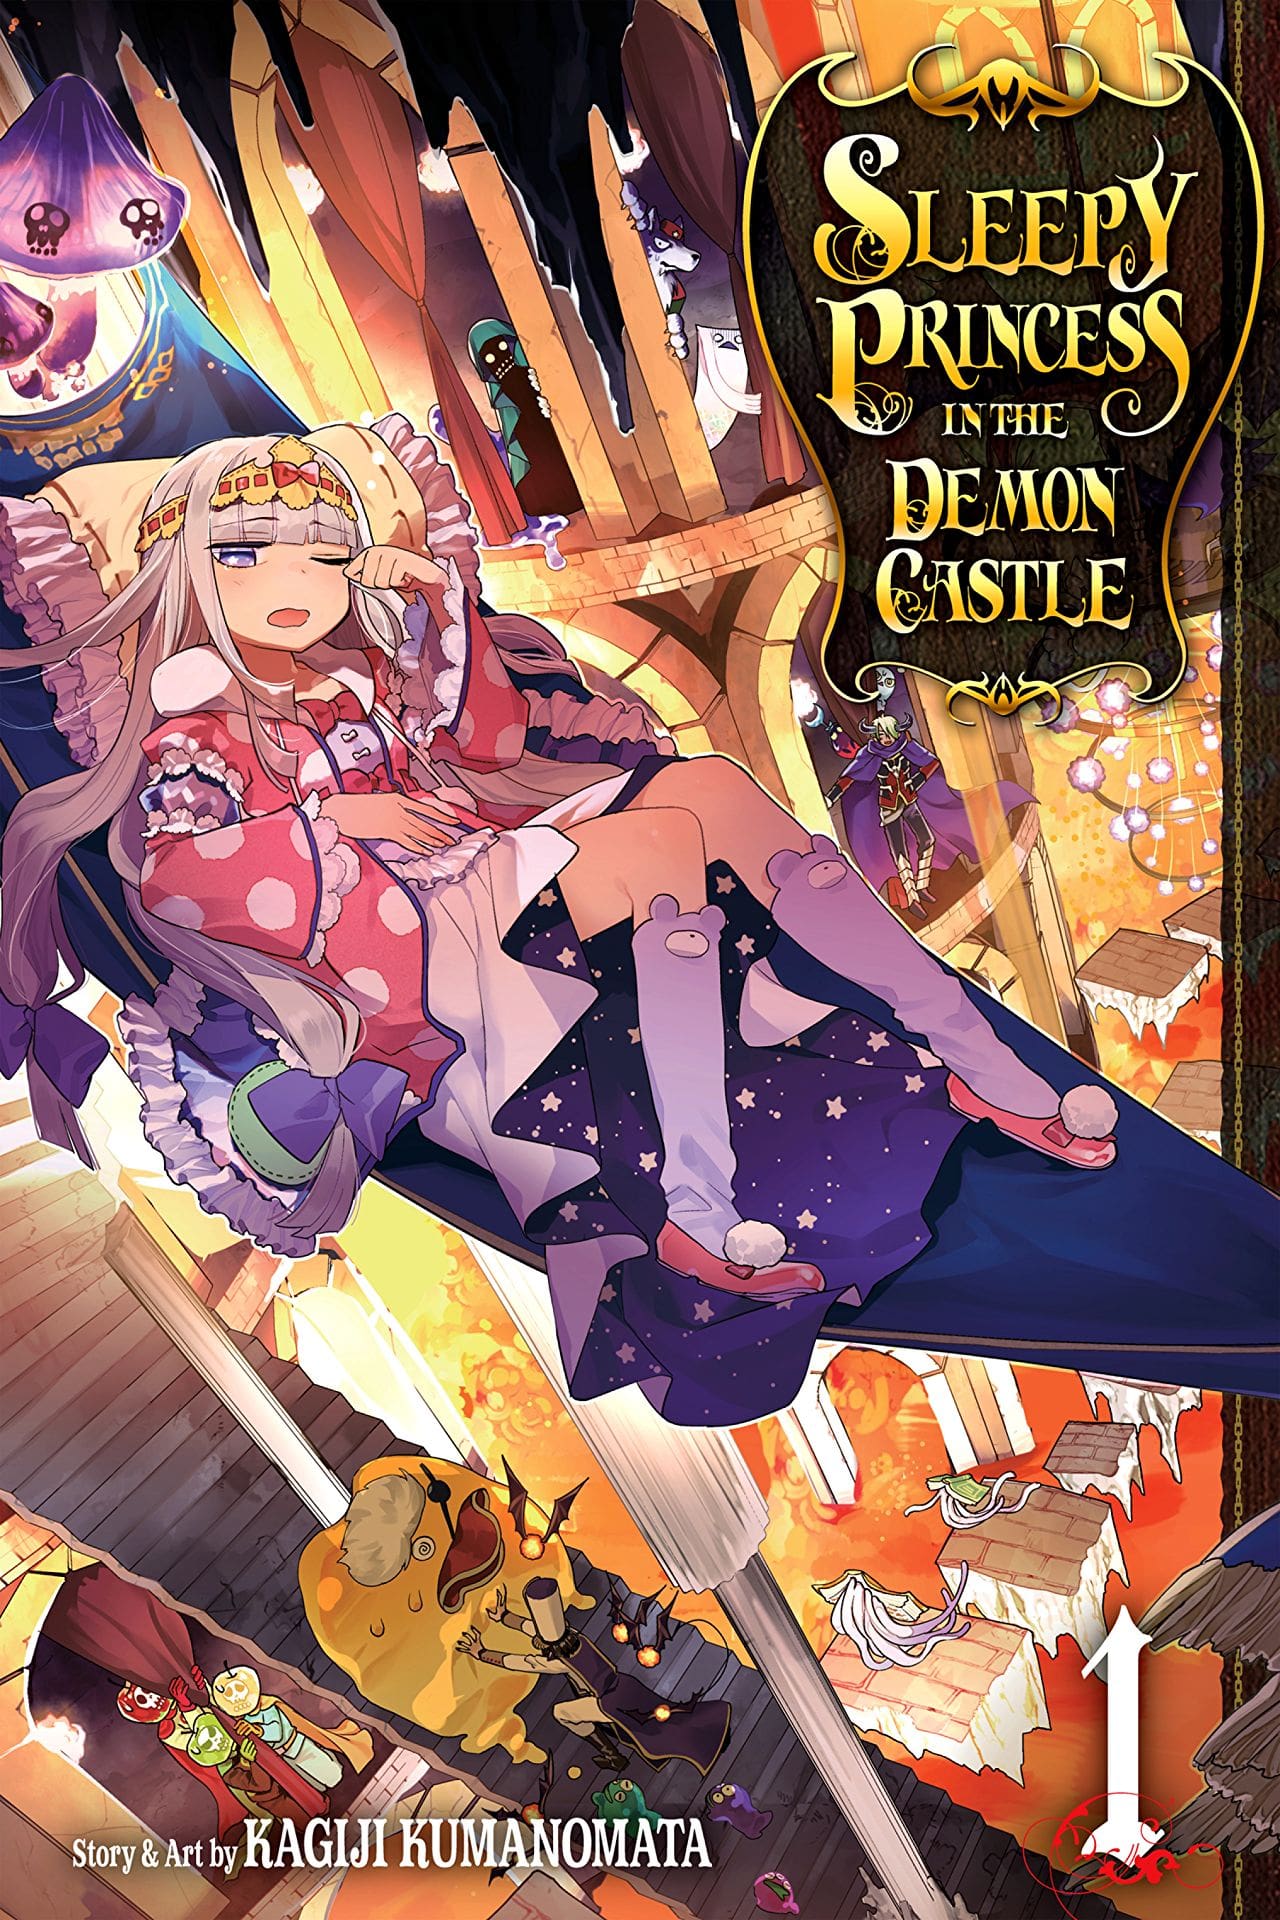 Sleepy Princess in the Demon Castle Vol. 1 Review